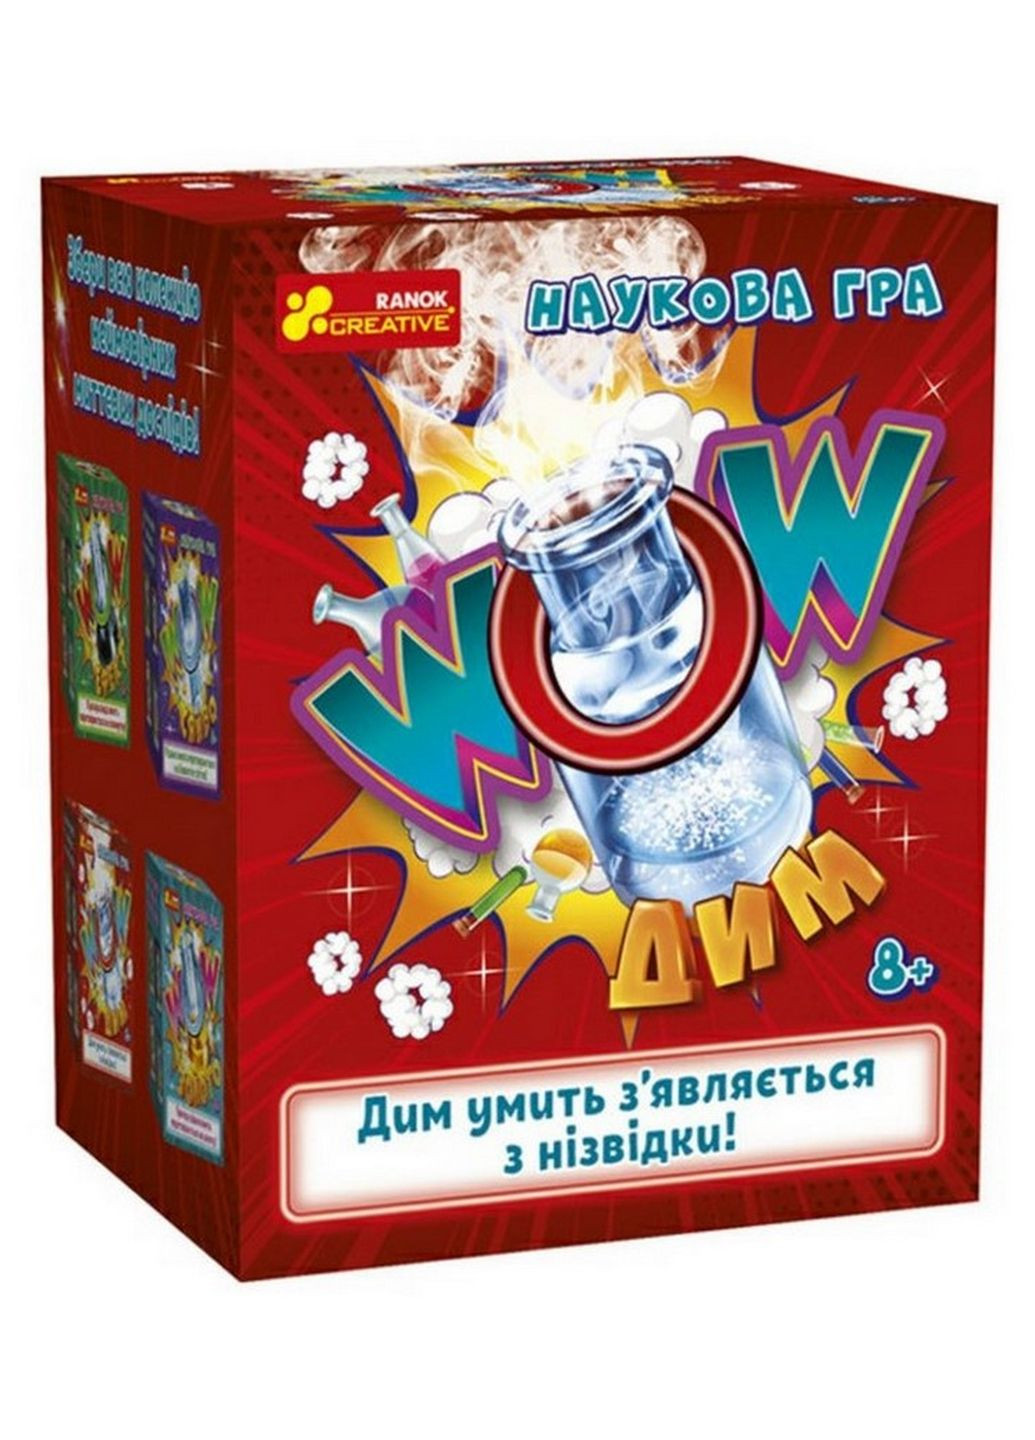 Детская научная игра WOW дым Ранок 10132099У на украинском языке Ranok Creative (265391835)